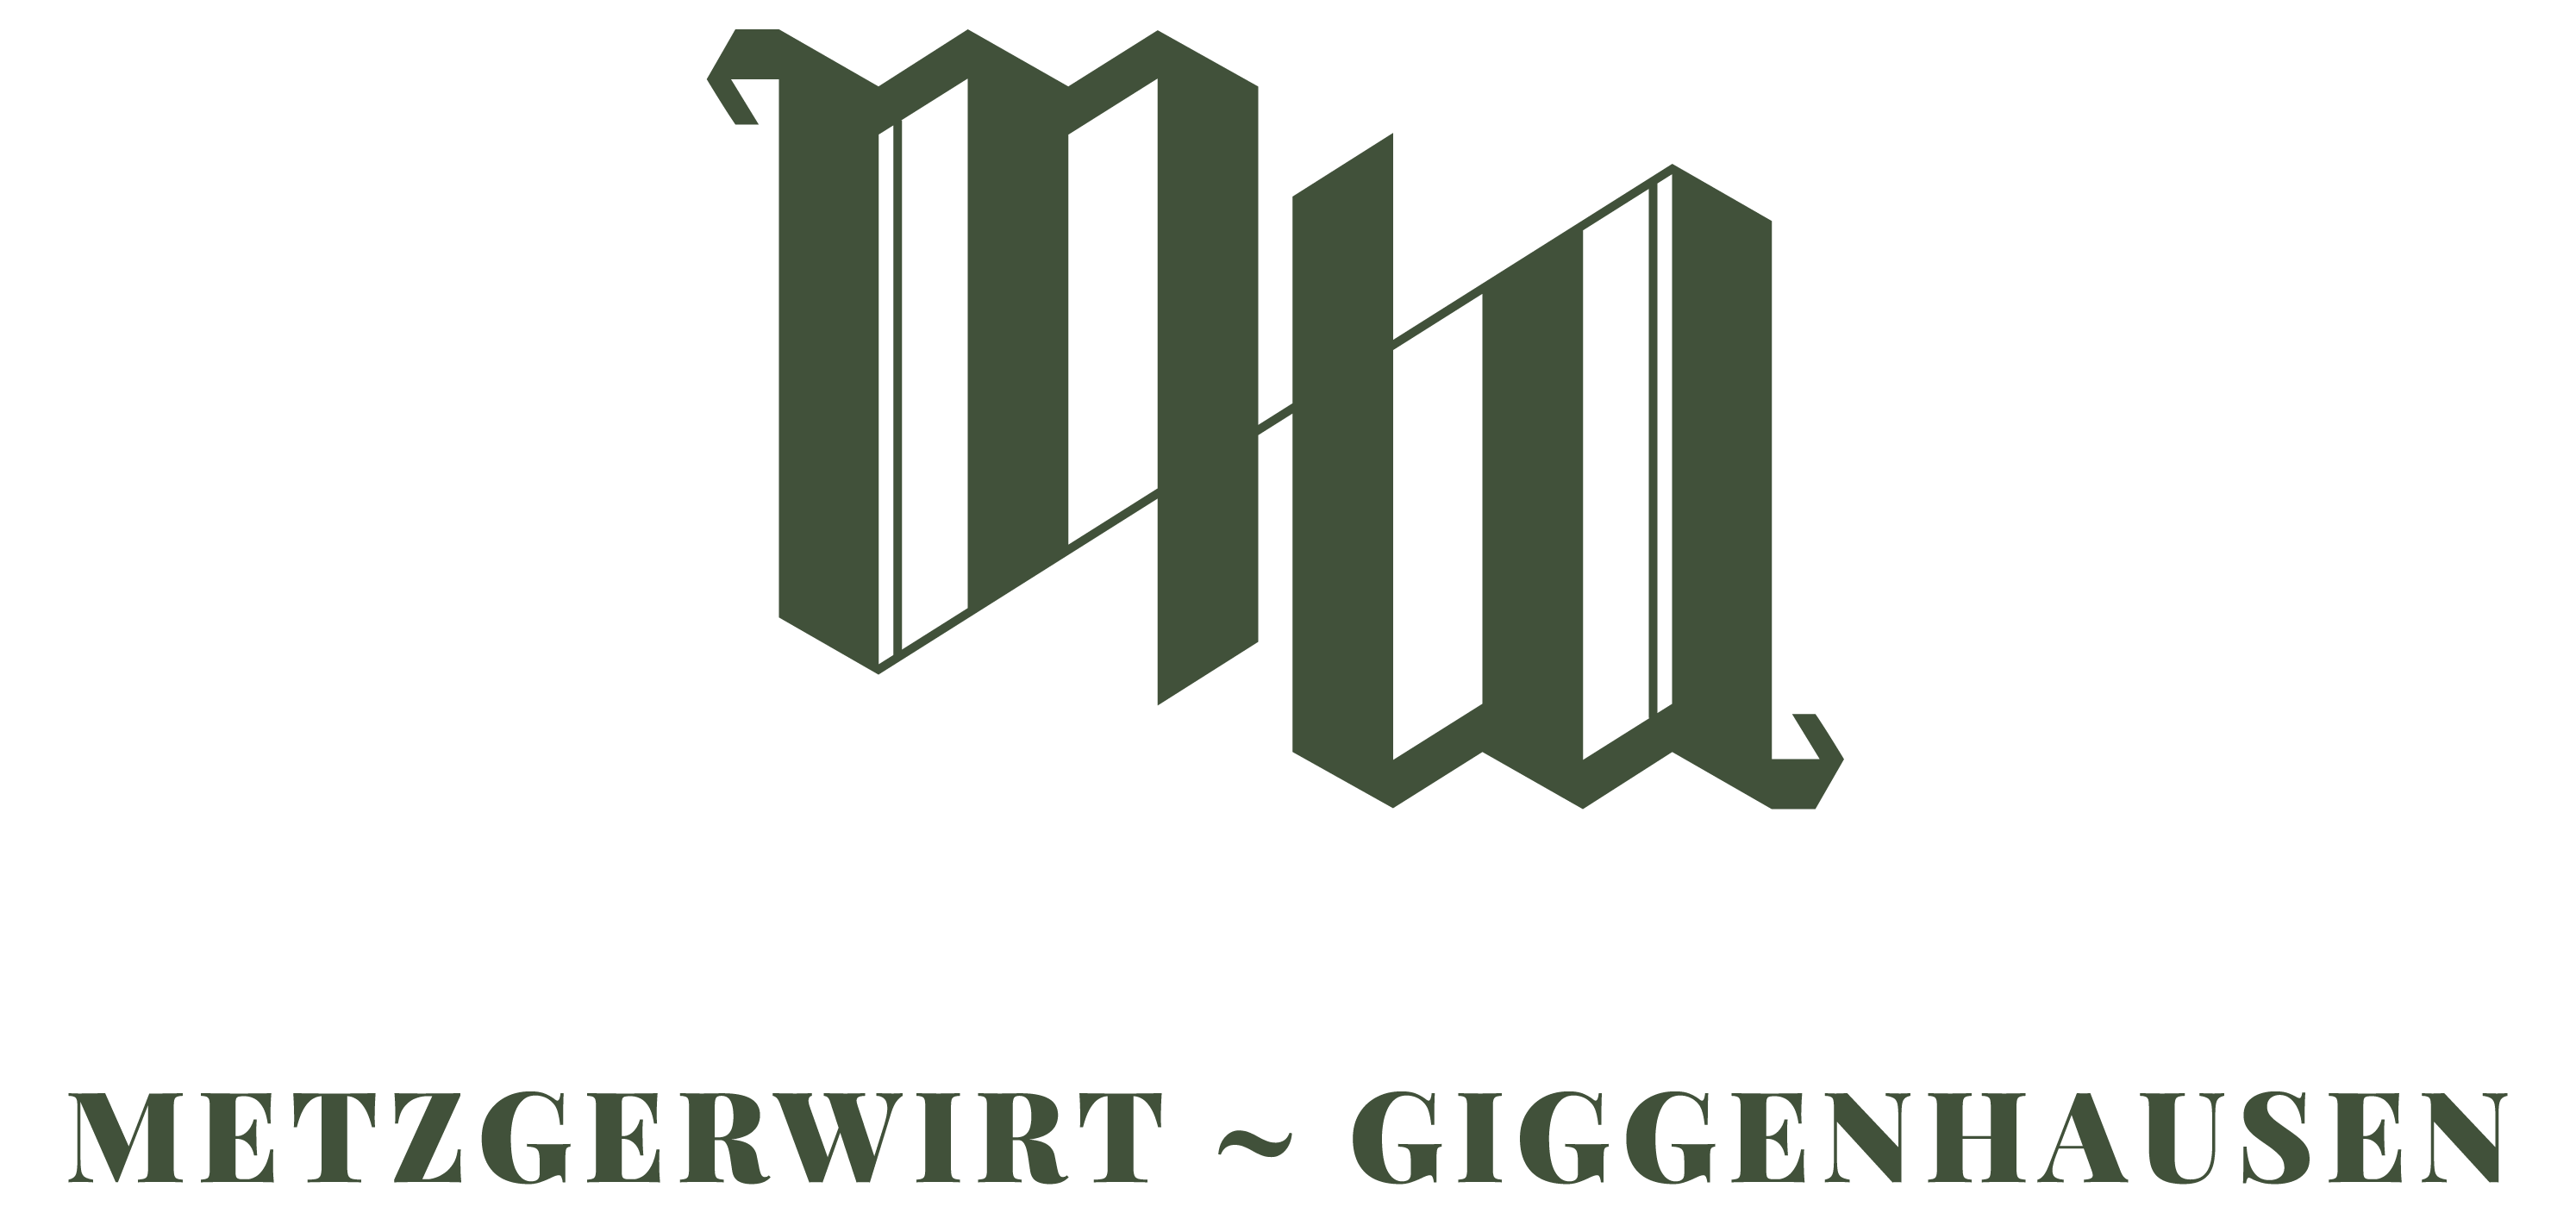 Metzgerwirt Giggenhausen